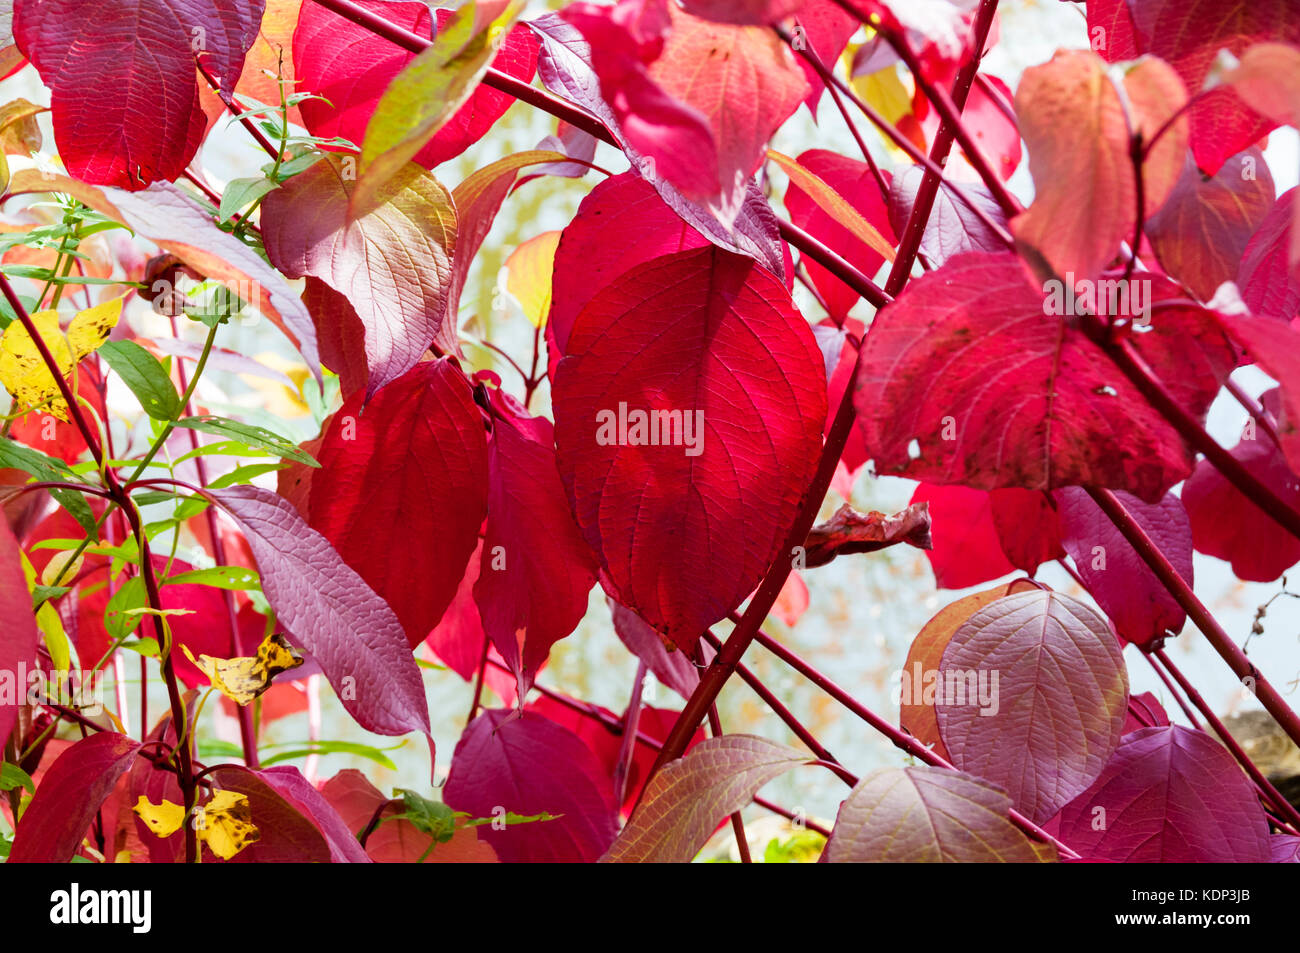 Red leaves and stems of Siberian dogwood or Cornus alba 'Sibirica' Stock Photo